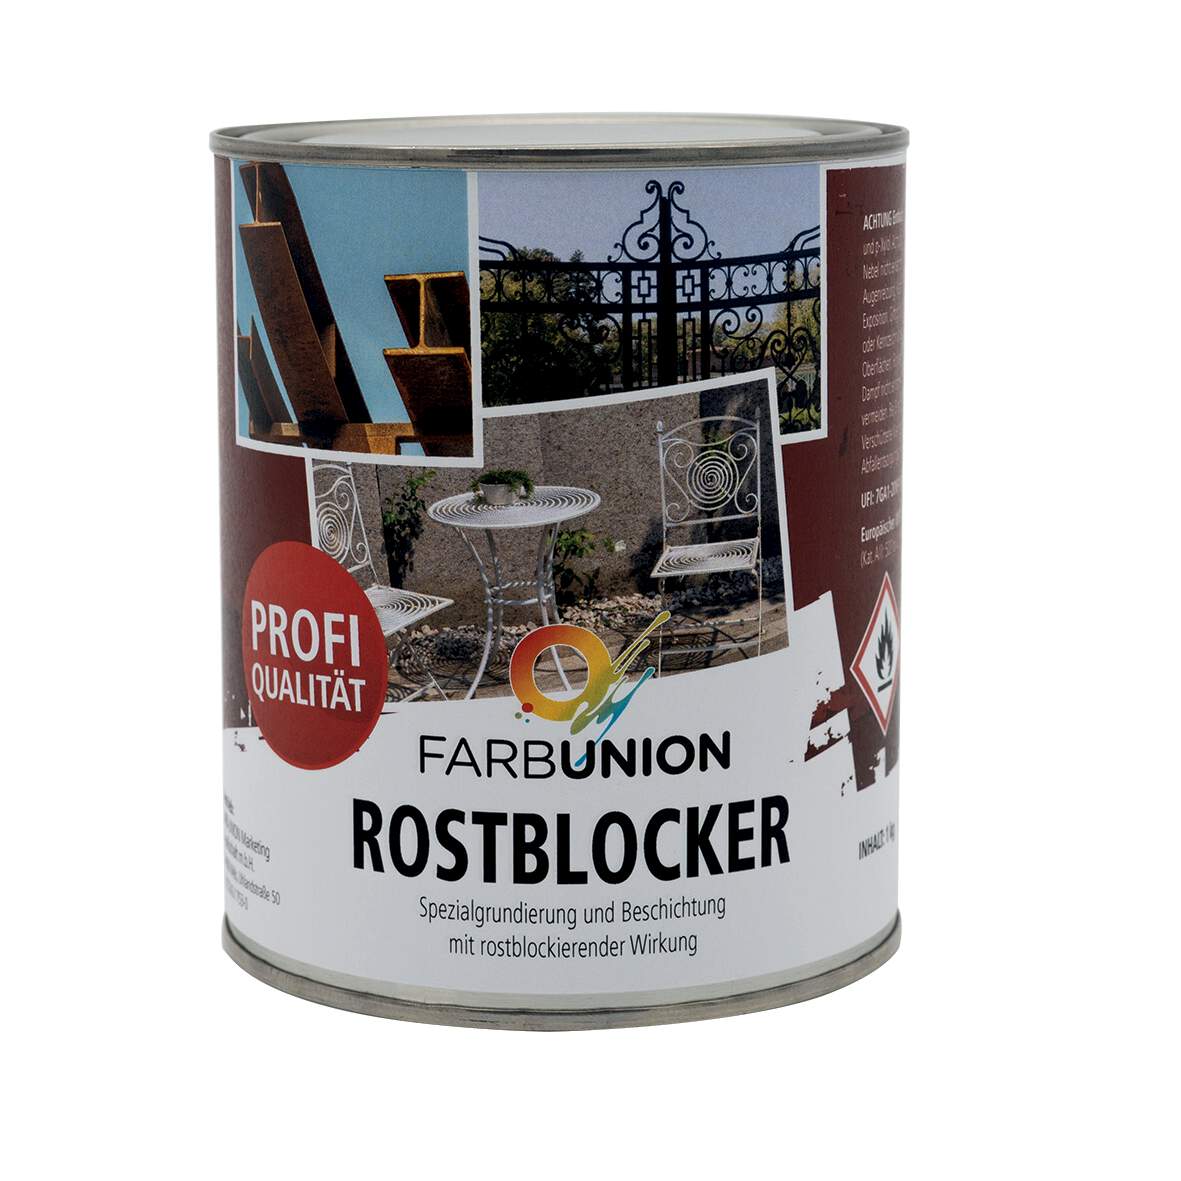 1256869 - Rostblocker rotbraun